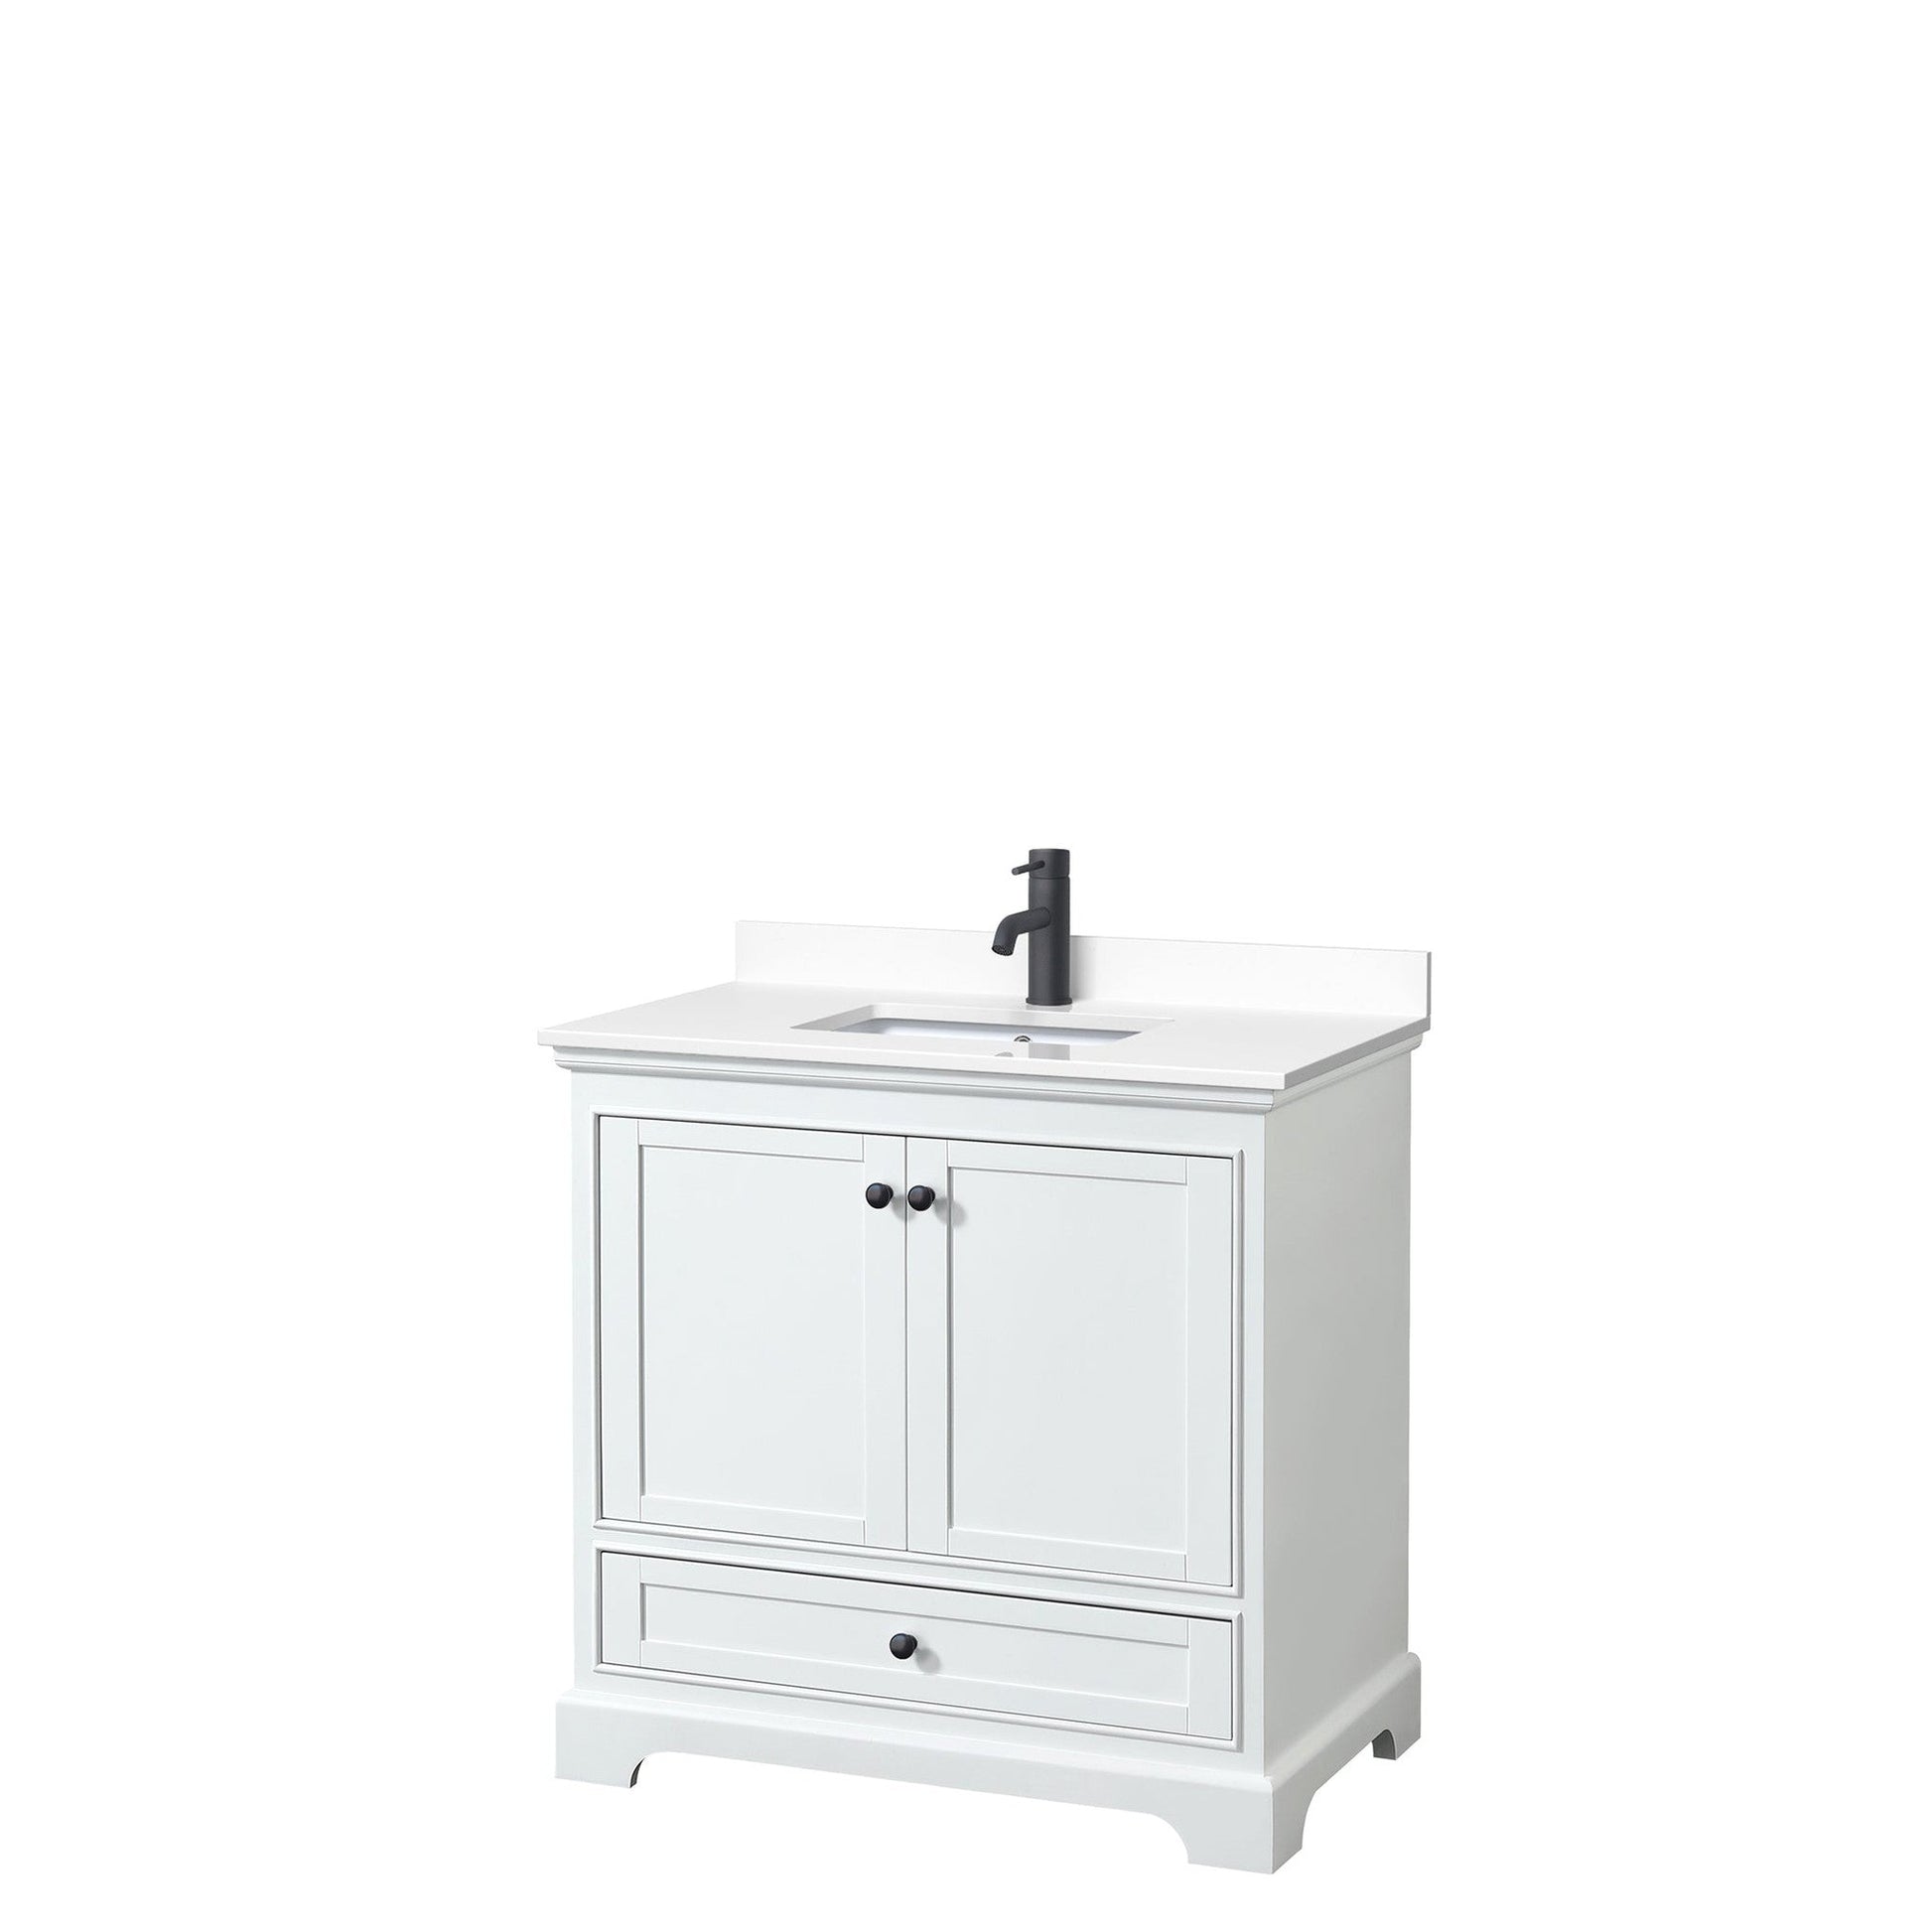 Deborah 36" Single Bathroom Vanity in White, White Cultured Marble Countertop, Undermount Square Sink, Matte Black Trim